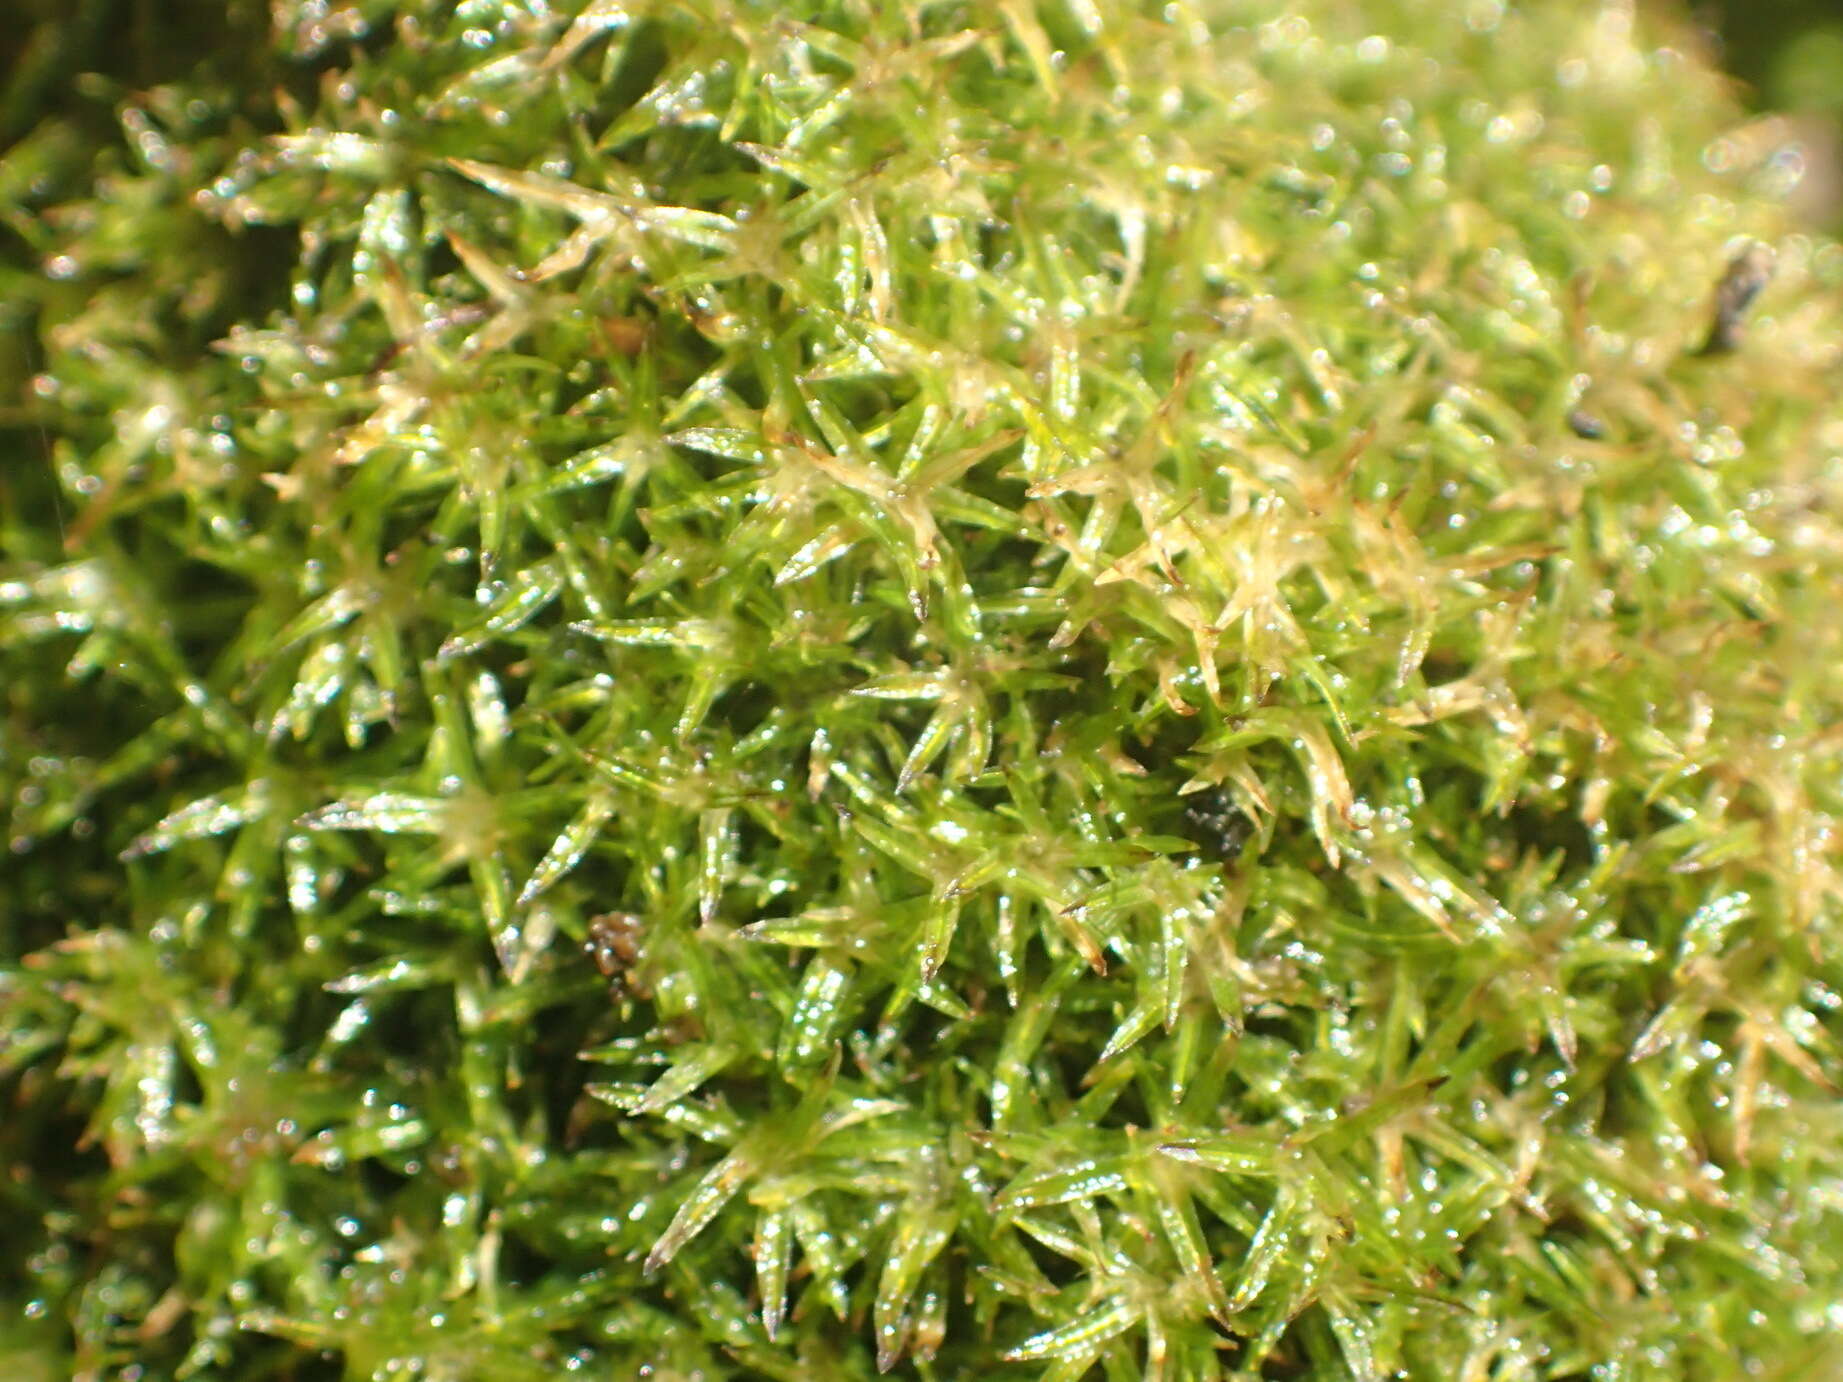 Image of Gaudichaud's syrrhopodon moss